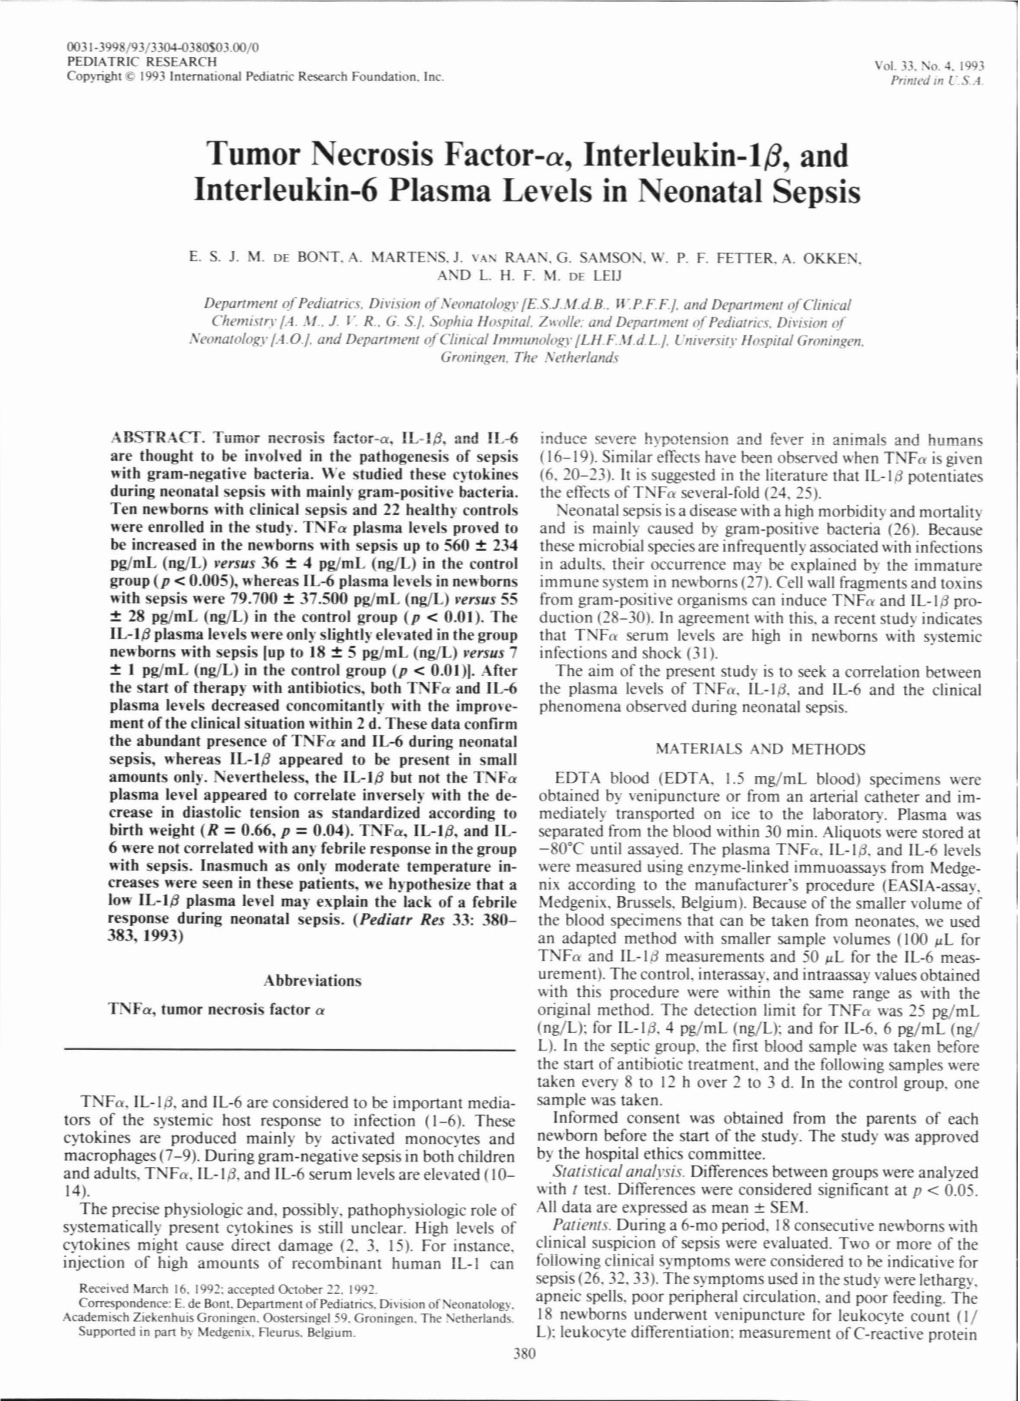 Tumor Necrosis Factor-A, Interleukin-16, and Interleukind Plasma Levels in Neonatal Sepsis